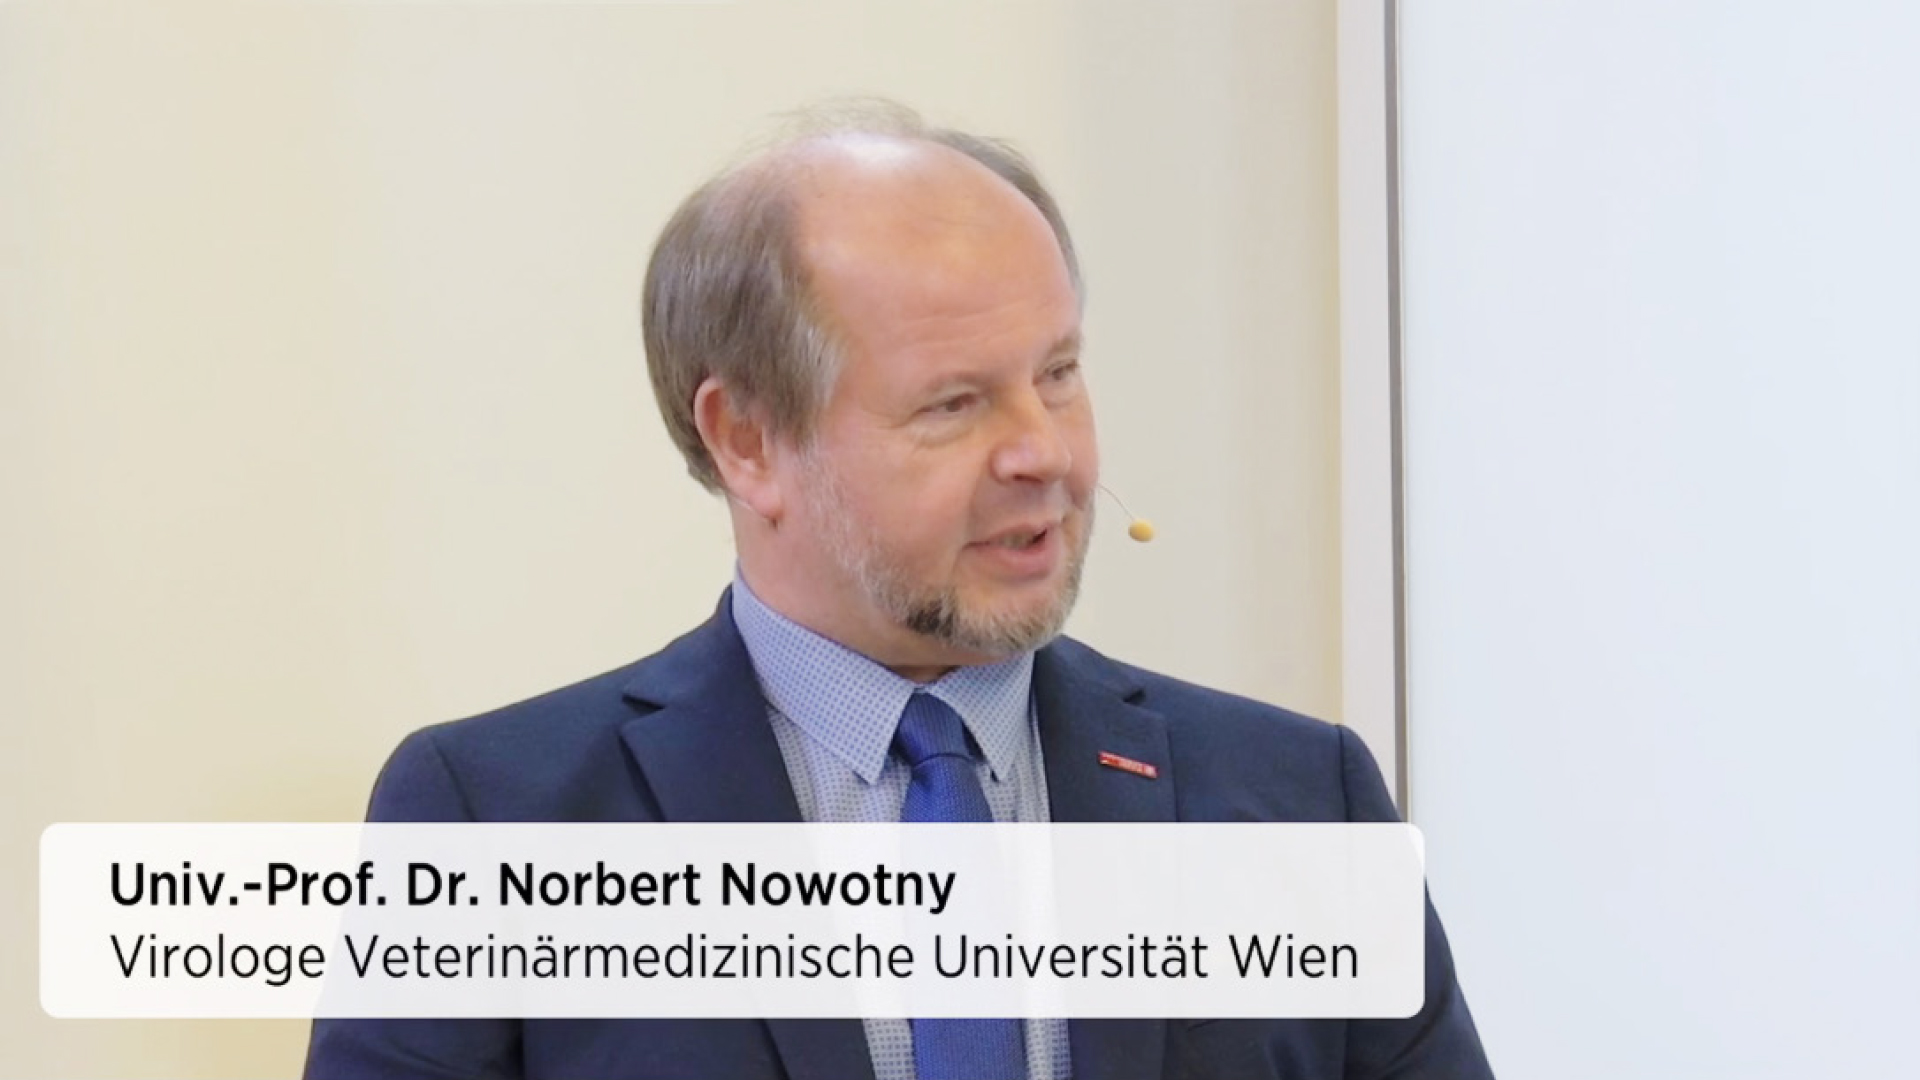 Virologe Univ.-Prof. Dr. Norbert Nowotny